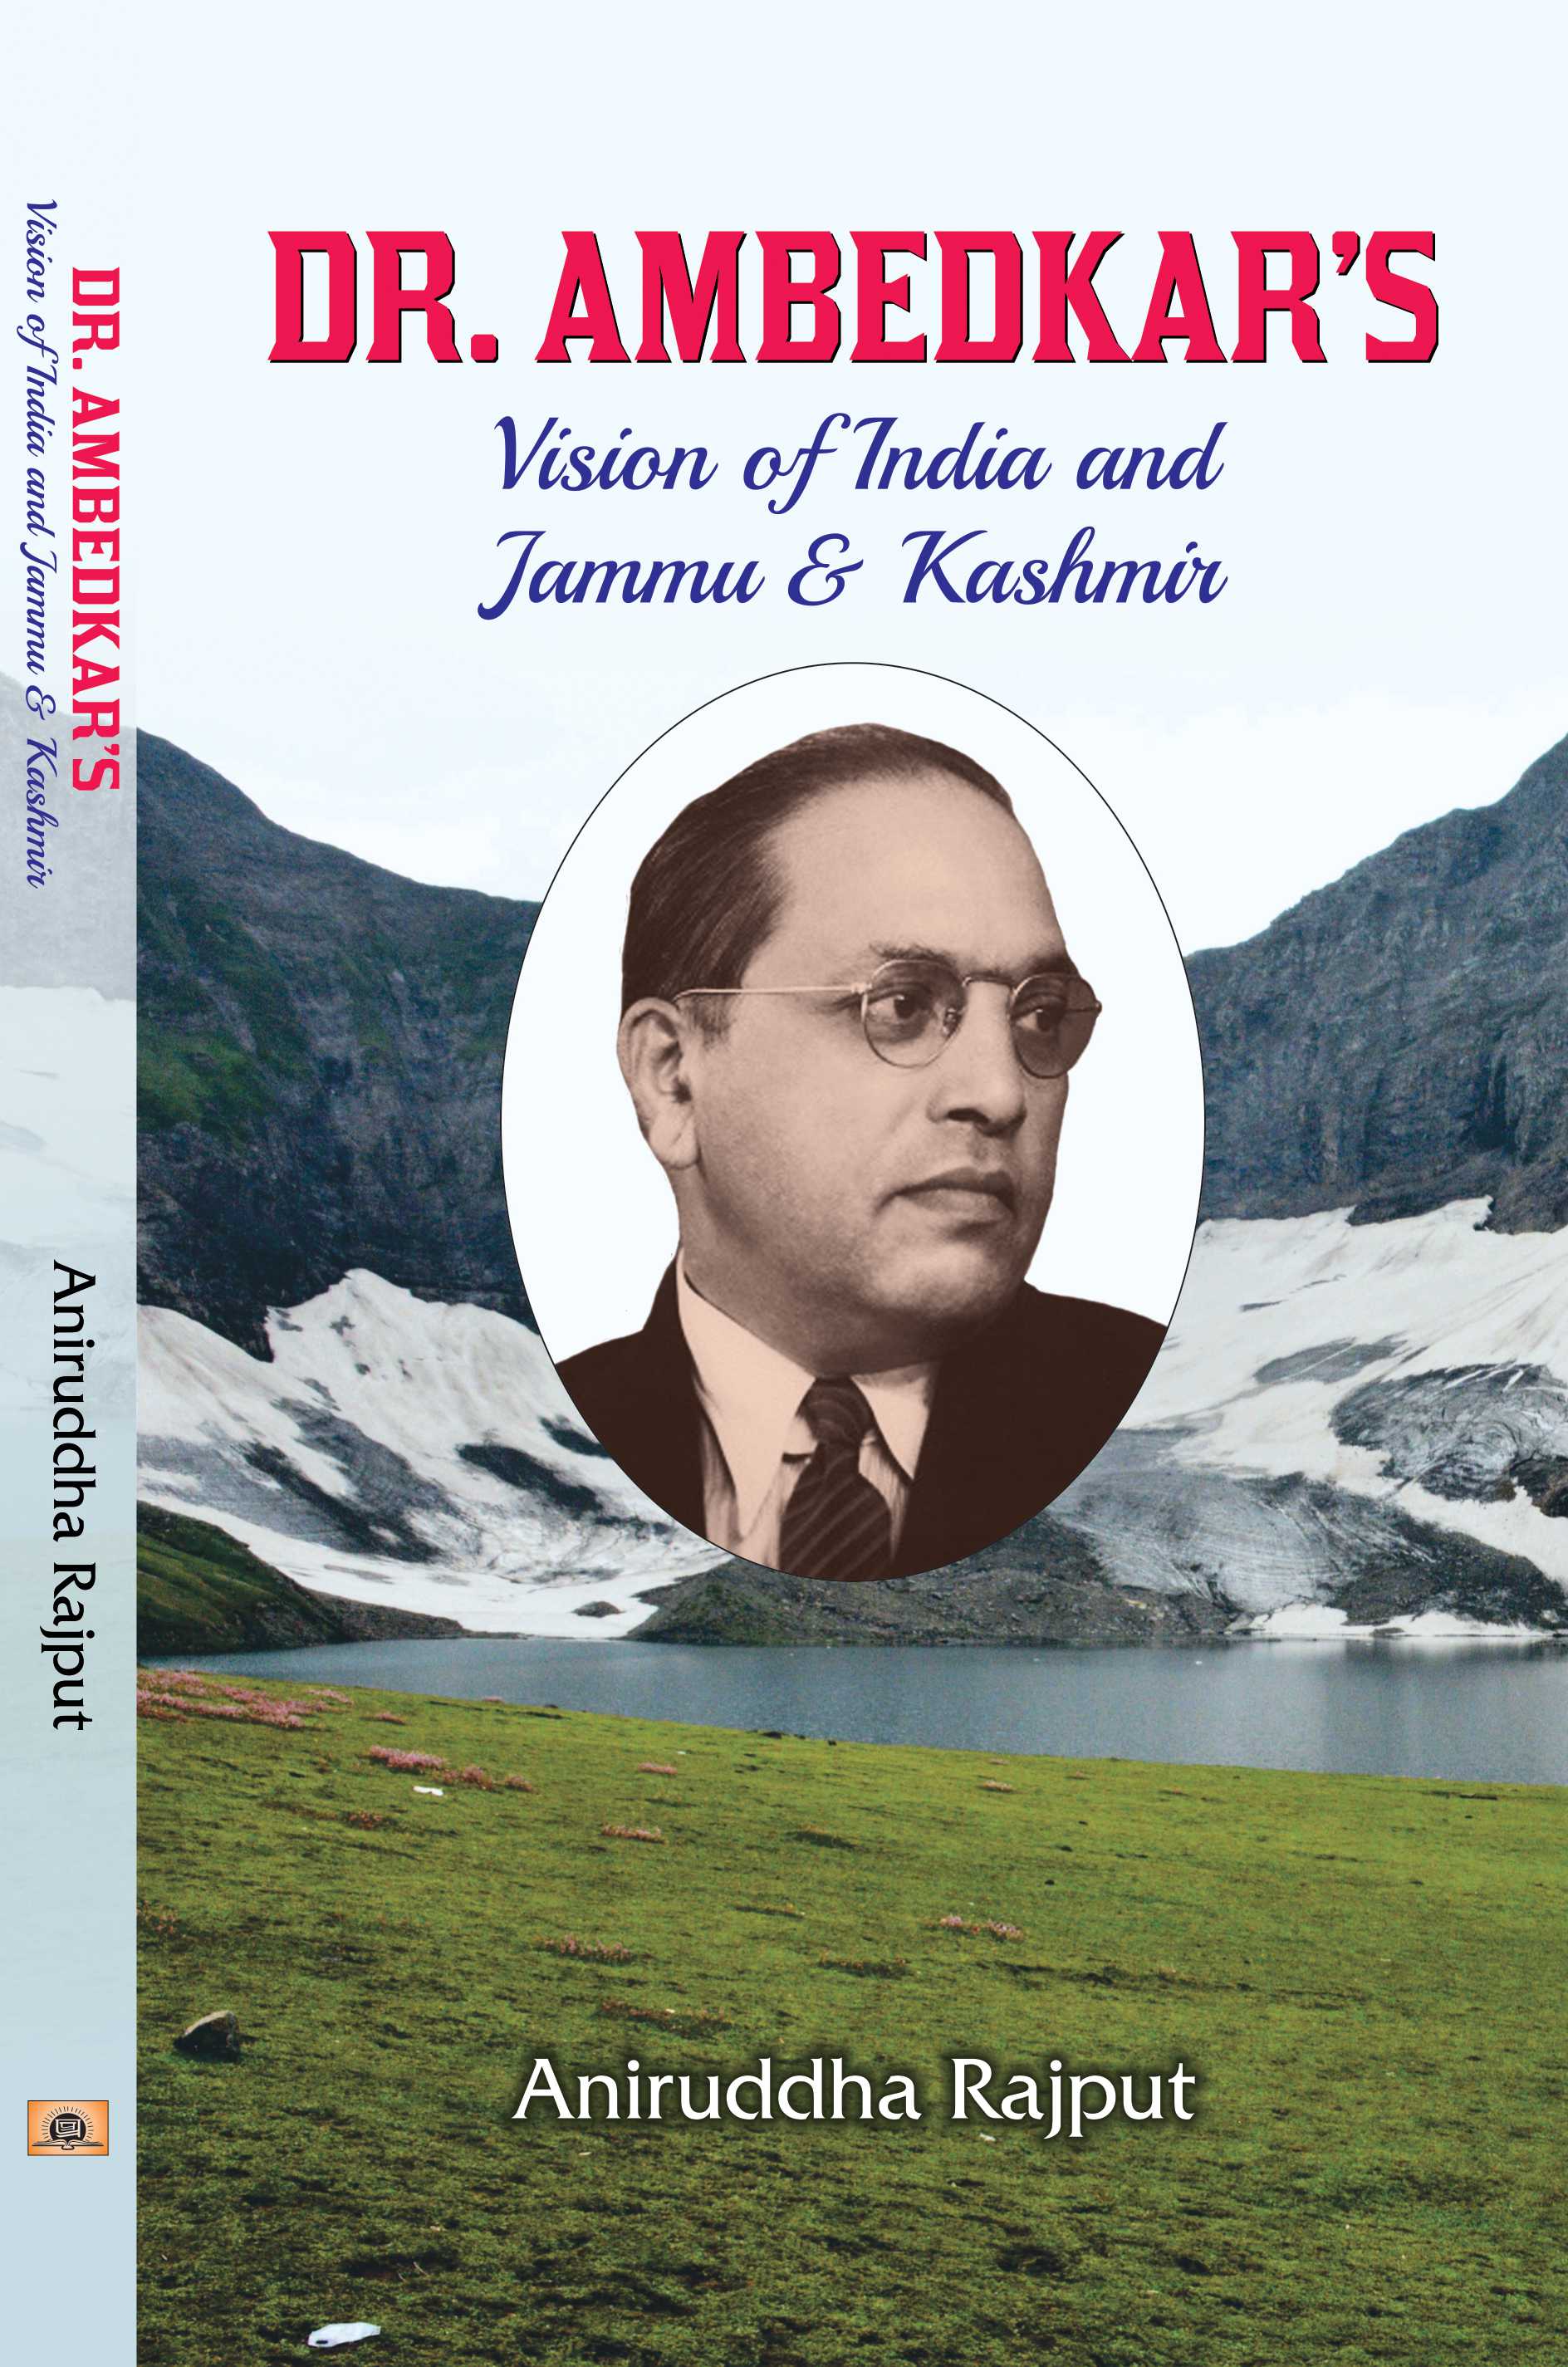 Dr. Ambedkarâ€™s Vision of India and Jammu & Kashmir